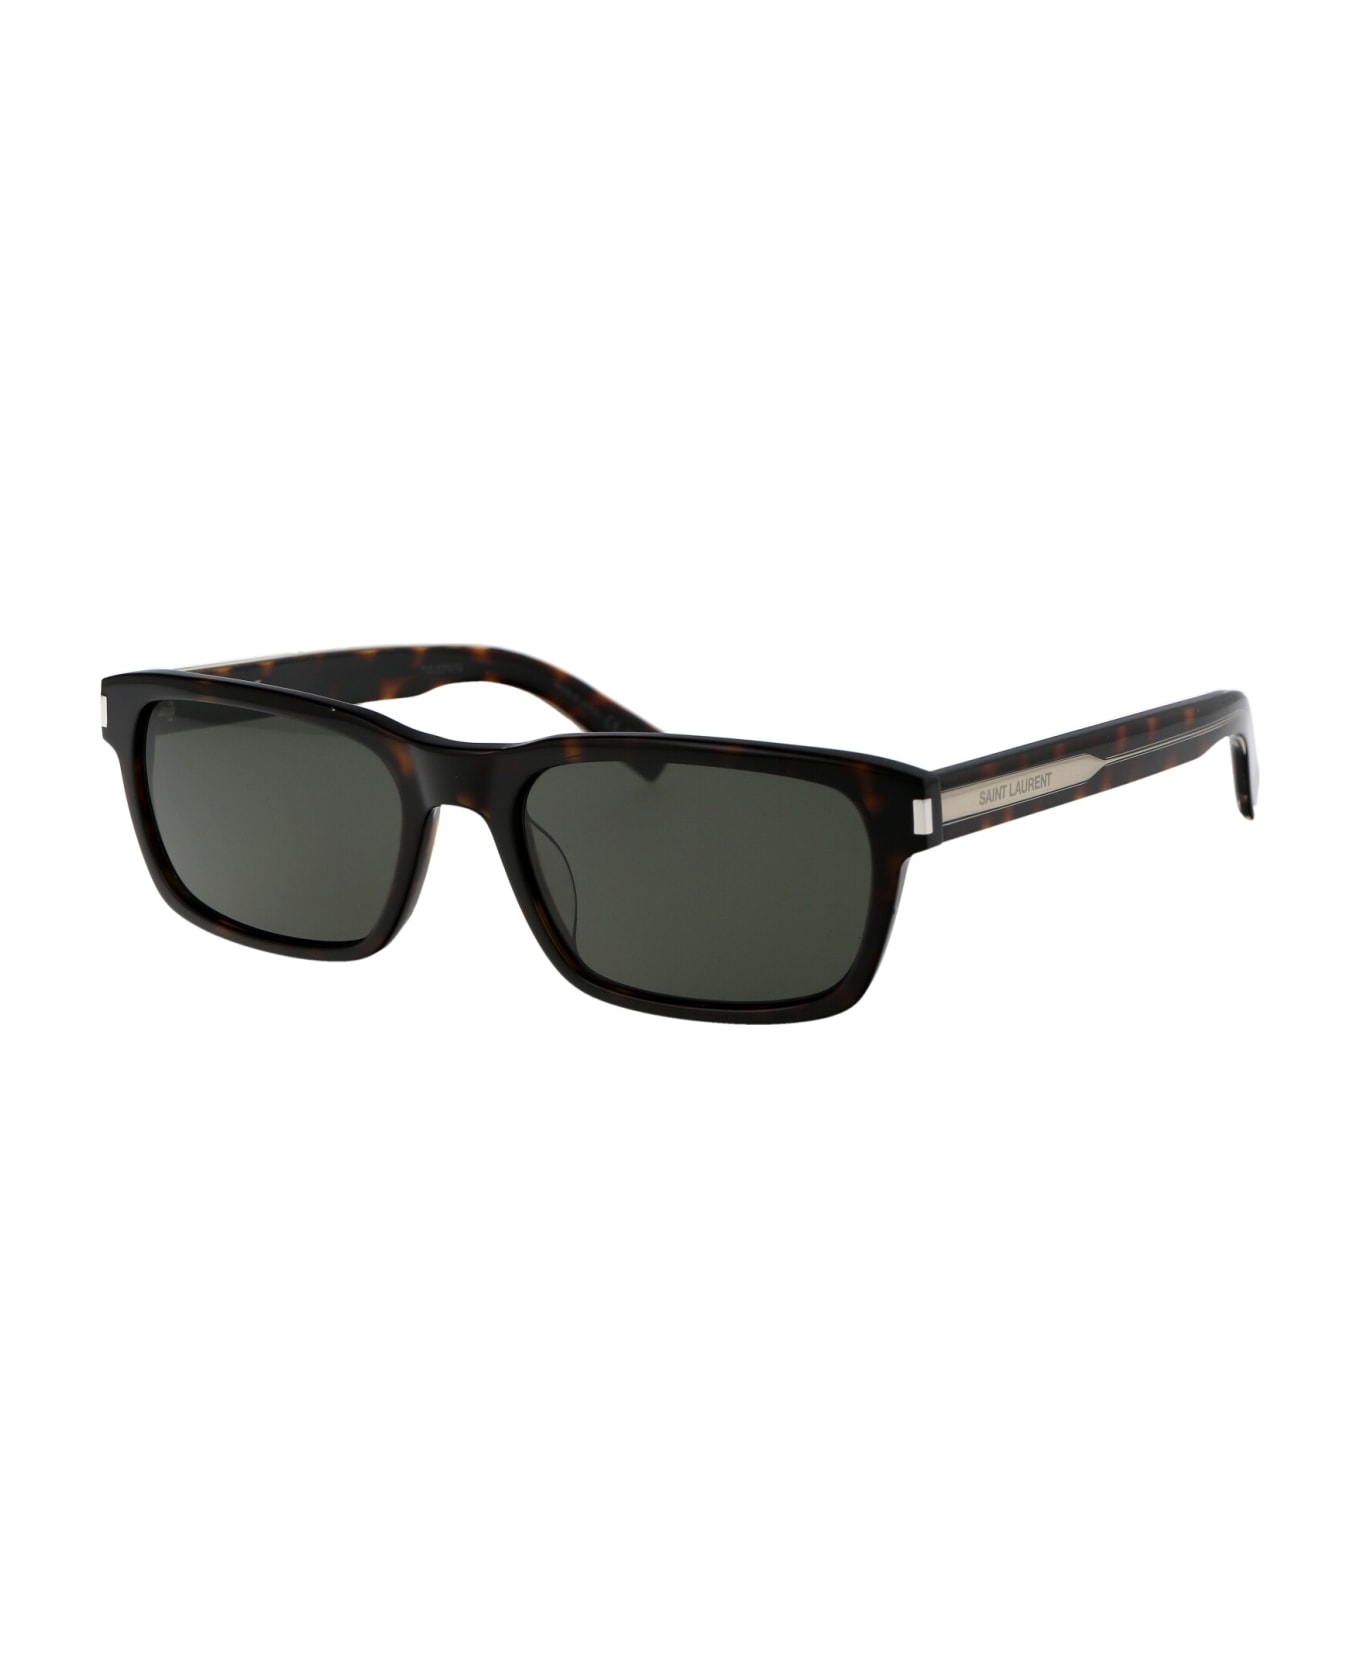 Saint Laurent Eyewear Sl 662 Sunglasses - 004 HAVANA CRYSTAL GREY